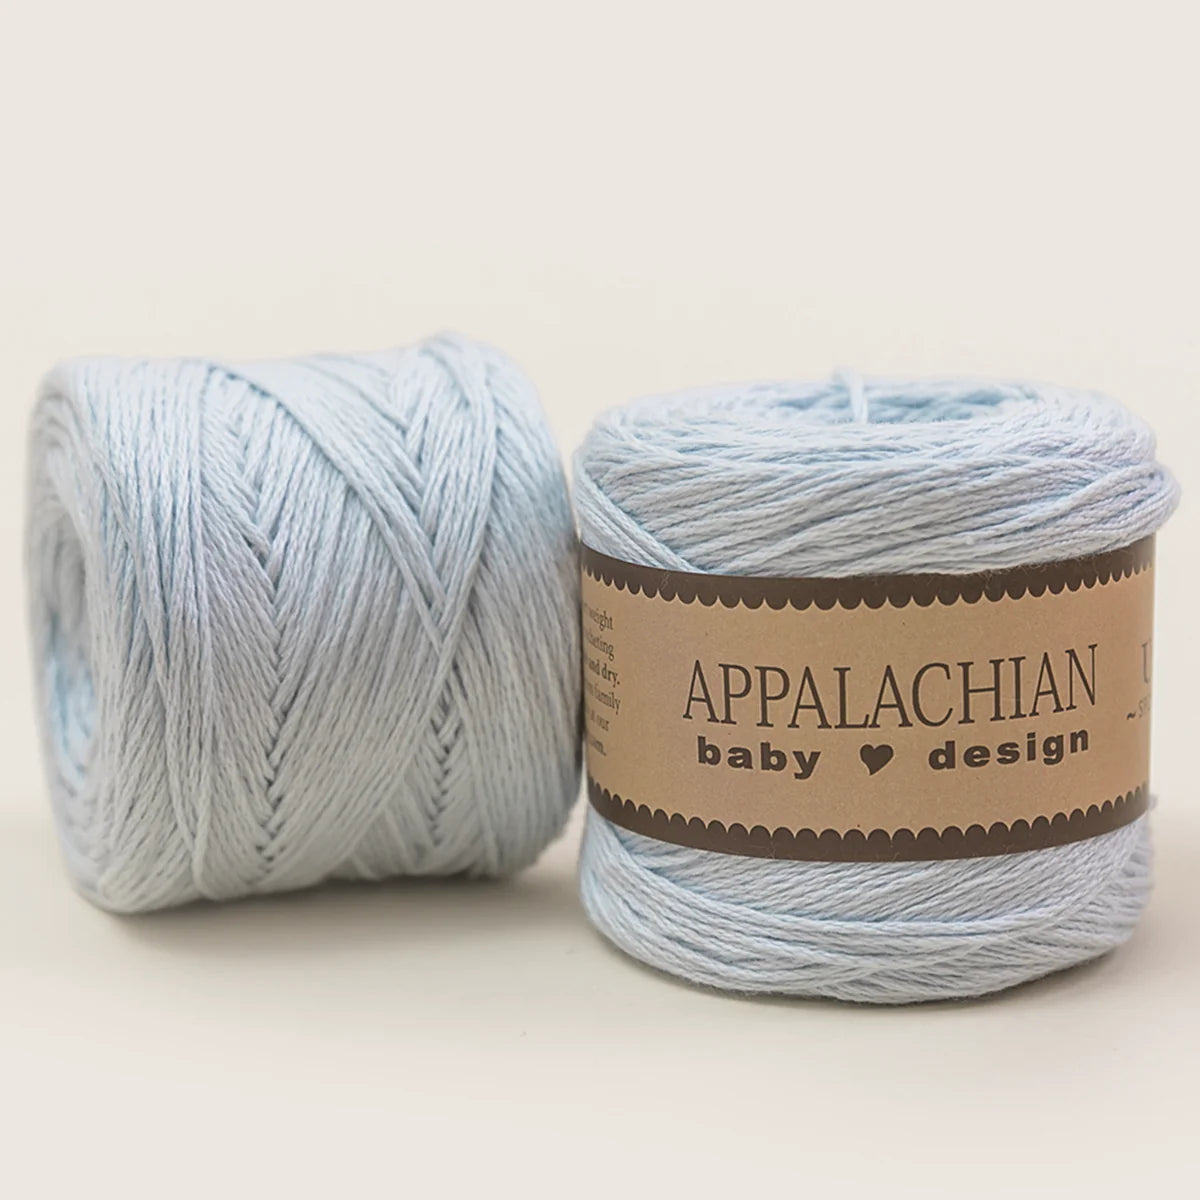 Appalachian Baby Yarn 100% US Organic